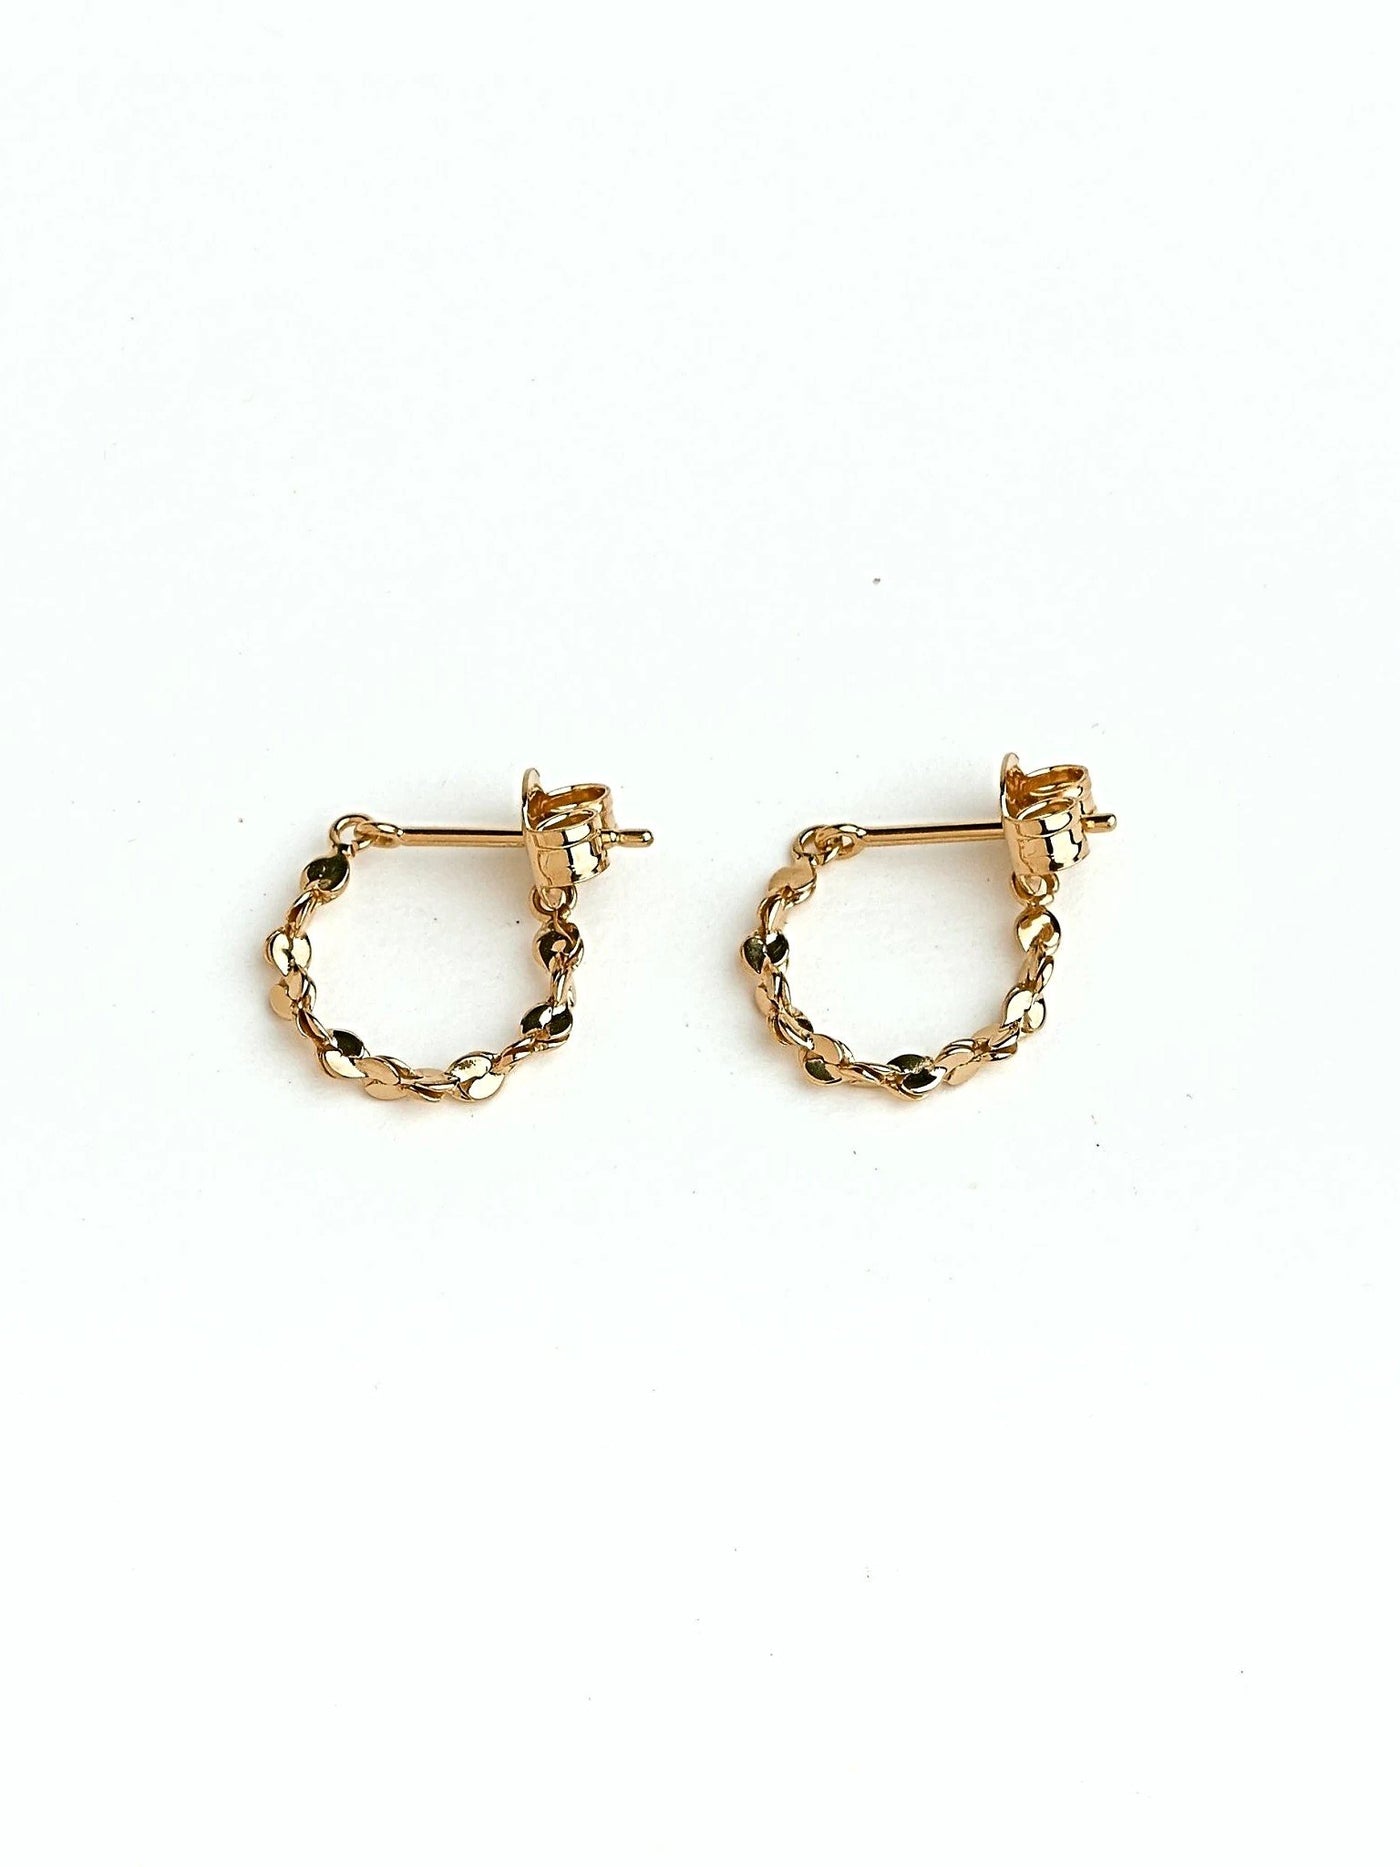 Dafang Chain Earrings - 24K Gold Plated11BackUpItemsBlack Friday GiftLunai Jewelry